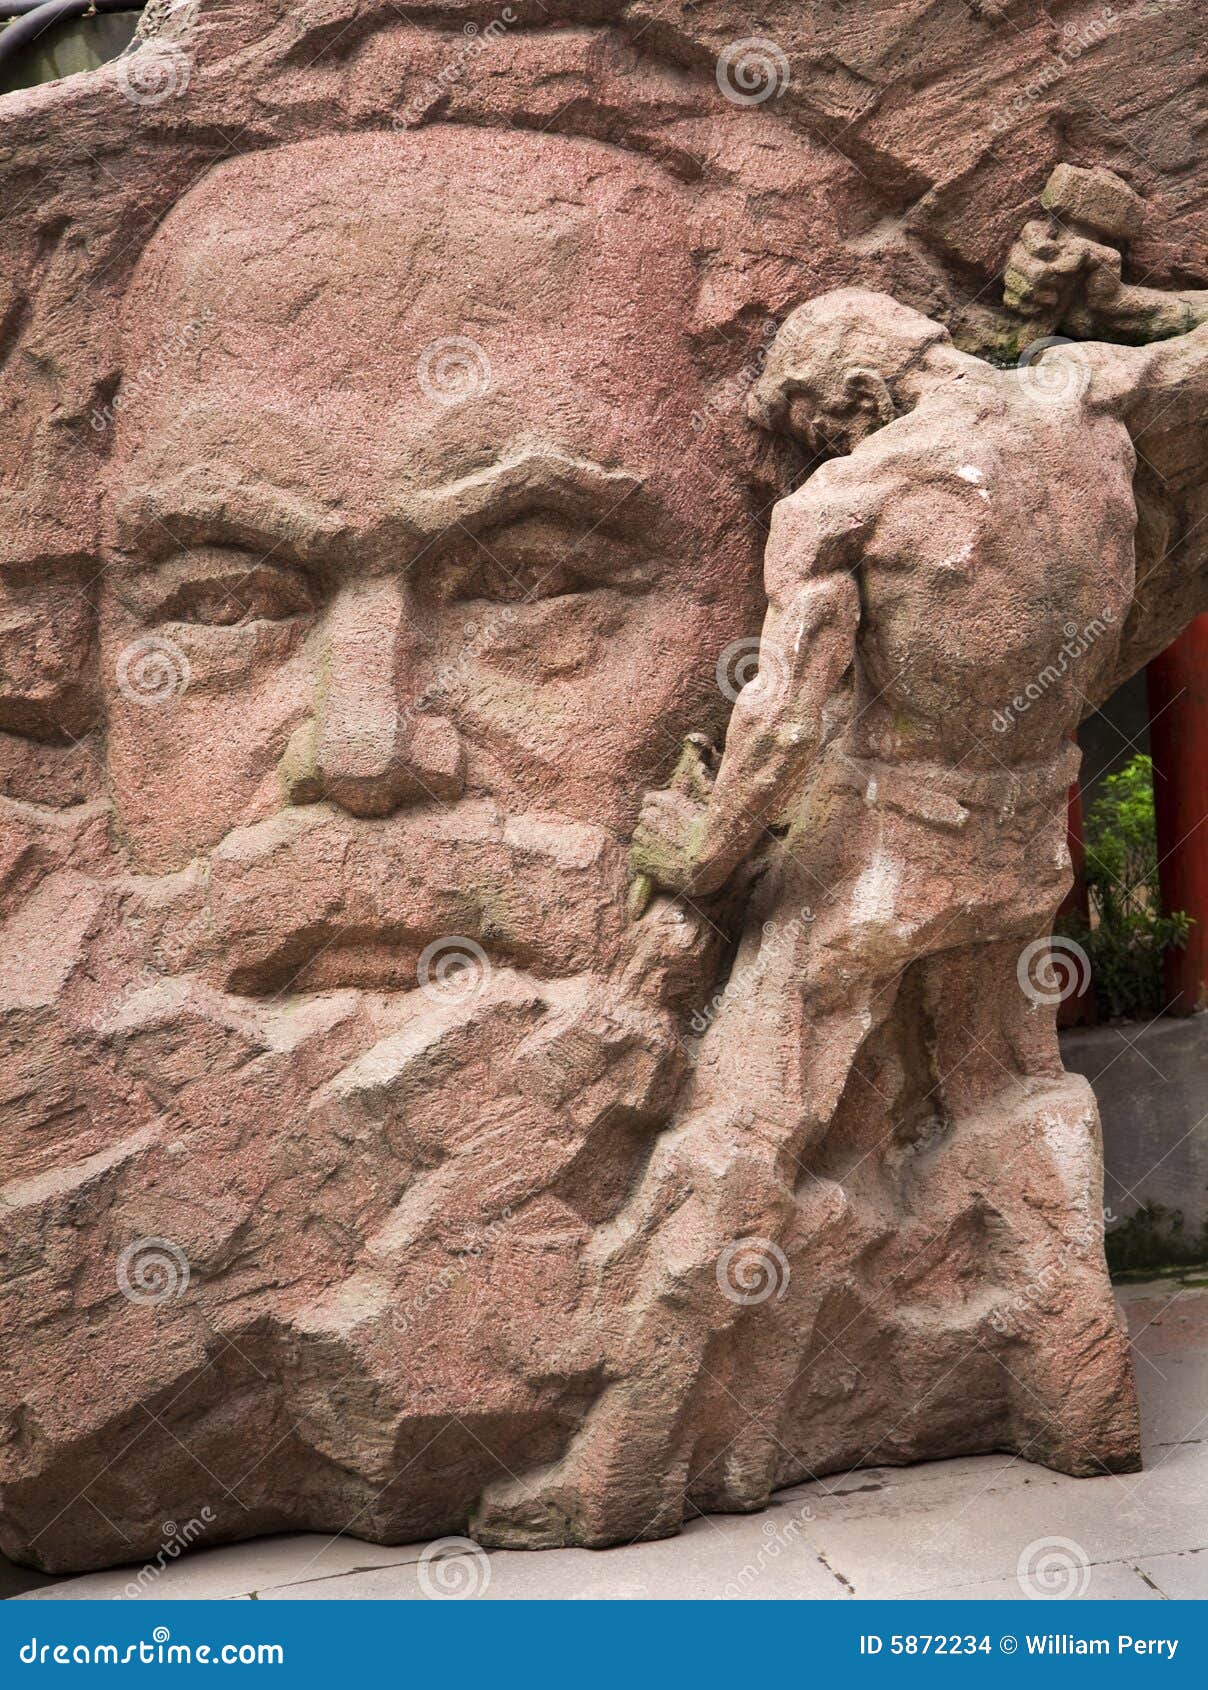 karl marx stone statue chongqing sichuan china